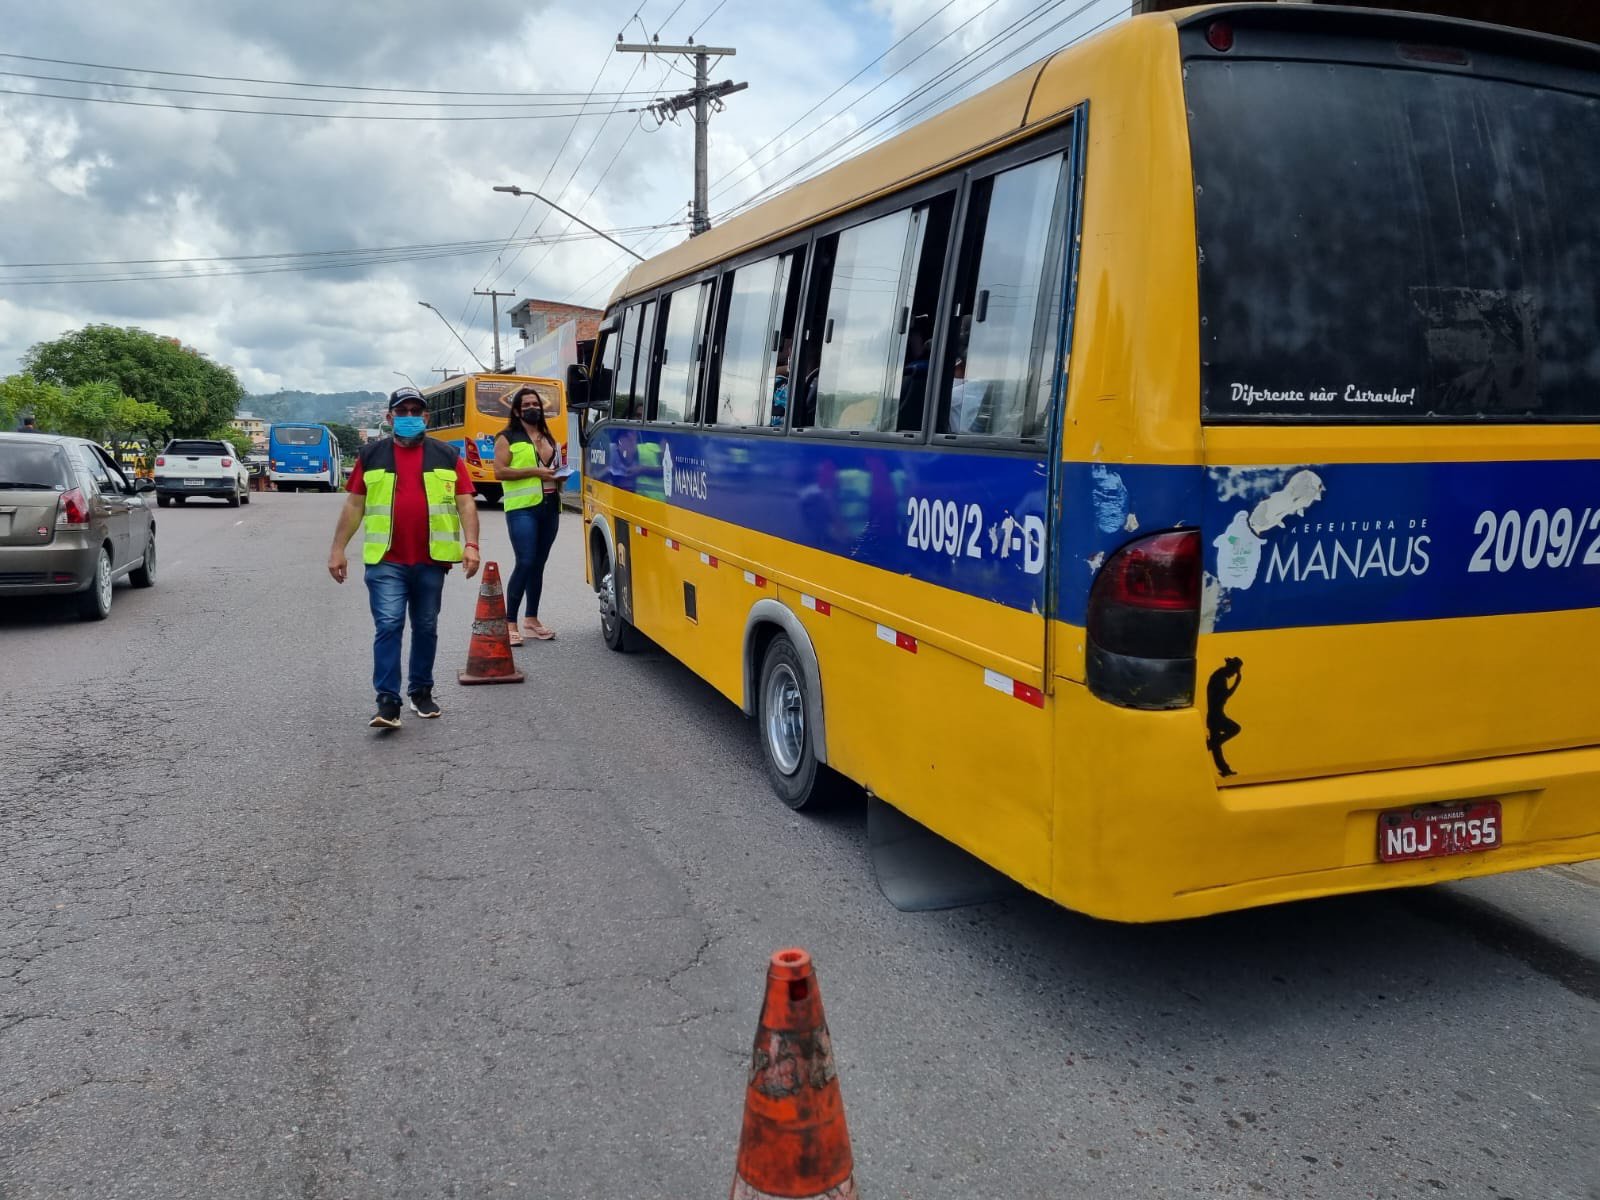 Prefeitura de Manaus faz mutirao de recadastro de Alternativos e Executivos esta semana 3